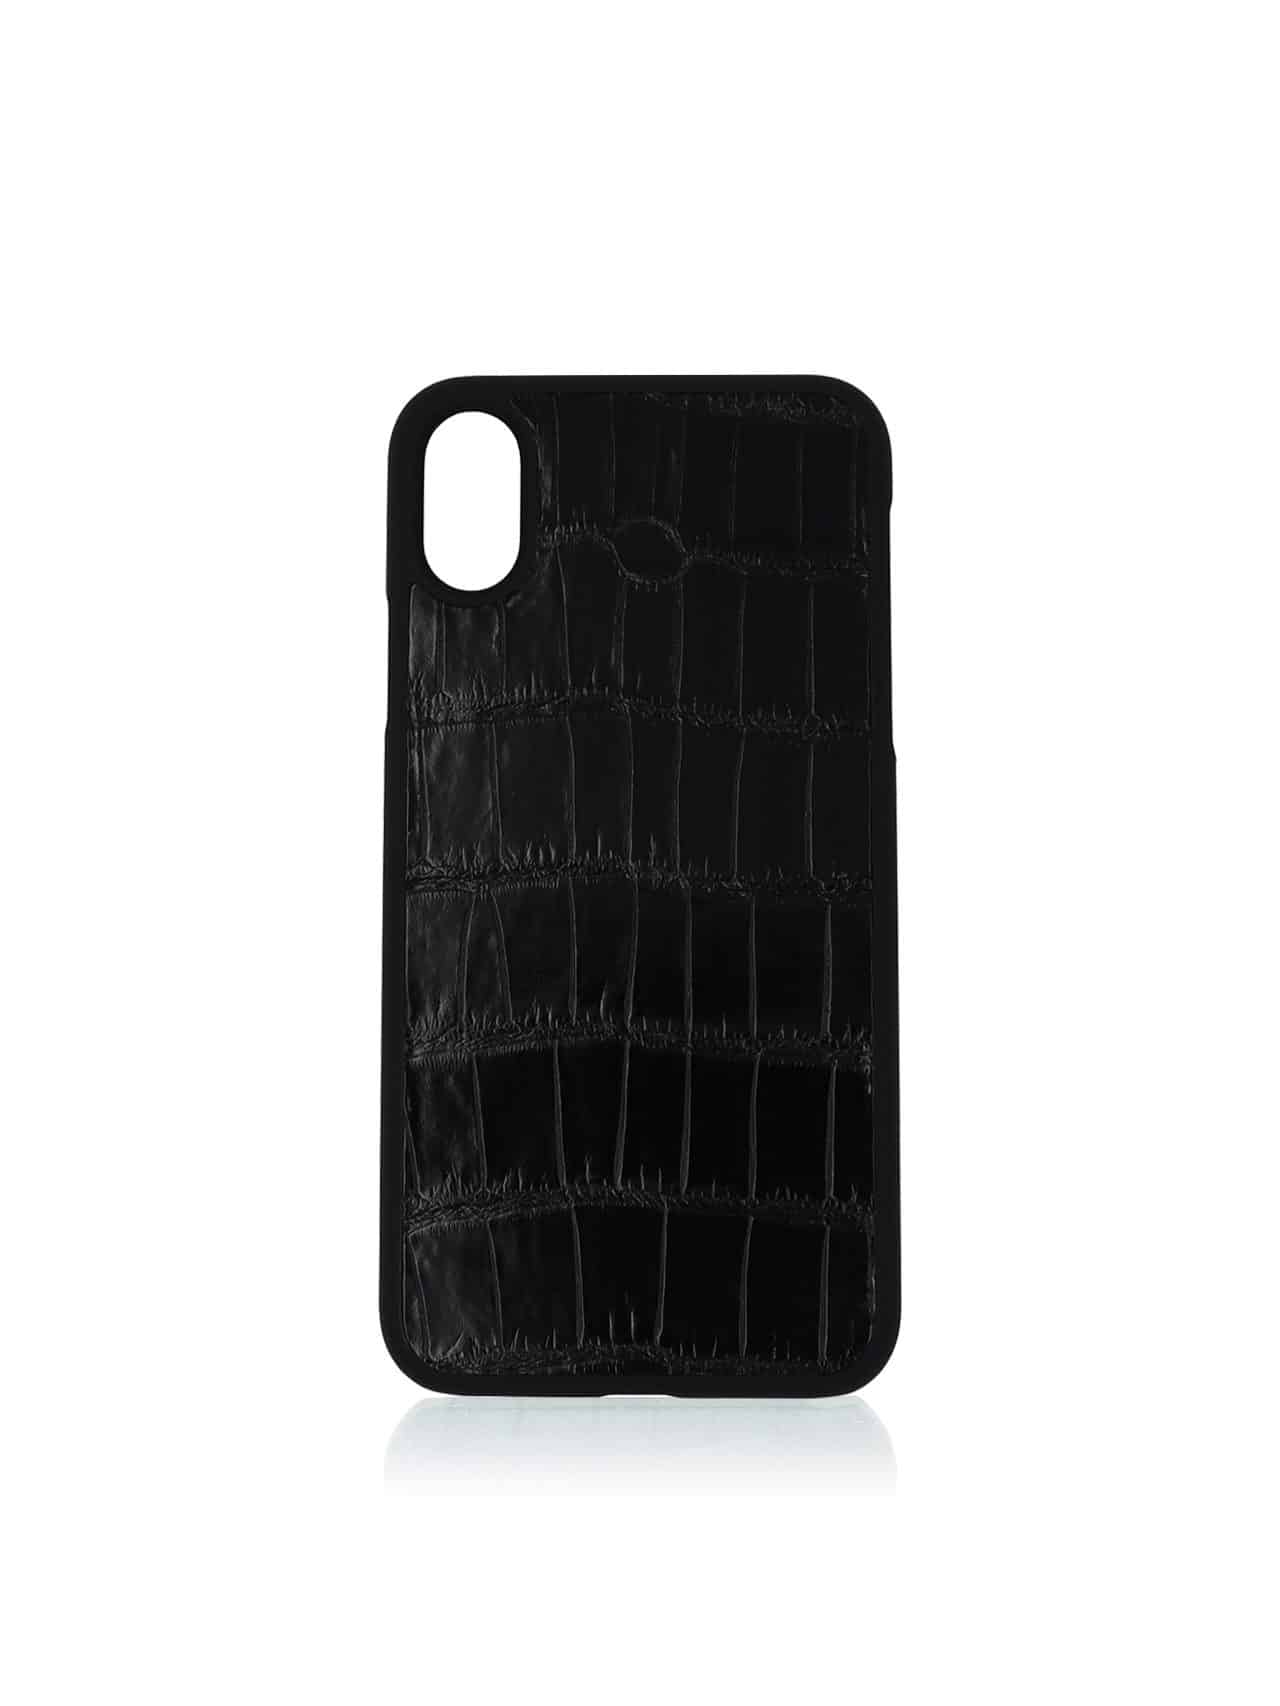 iphone case apple black crocodile